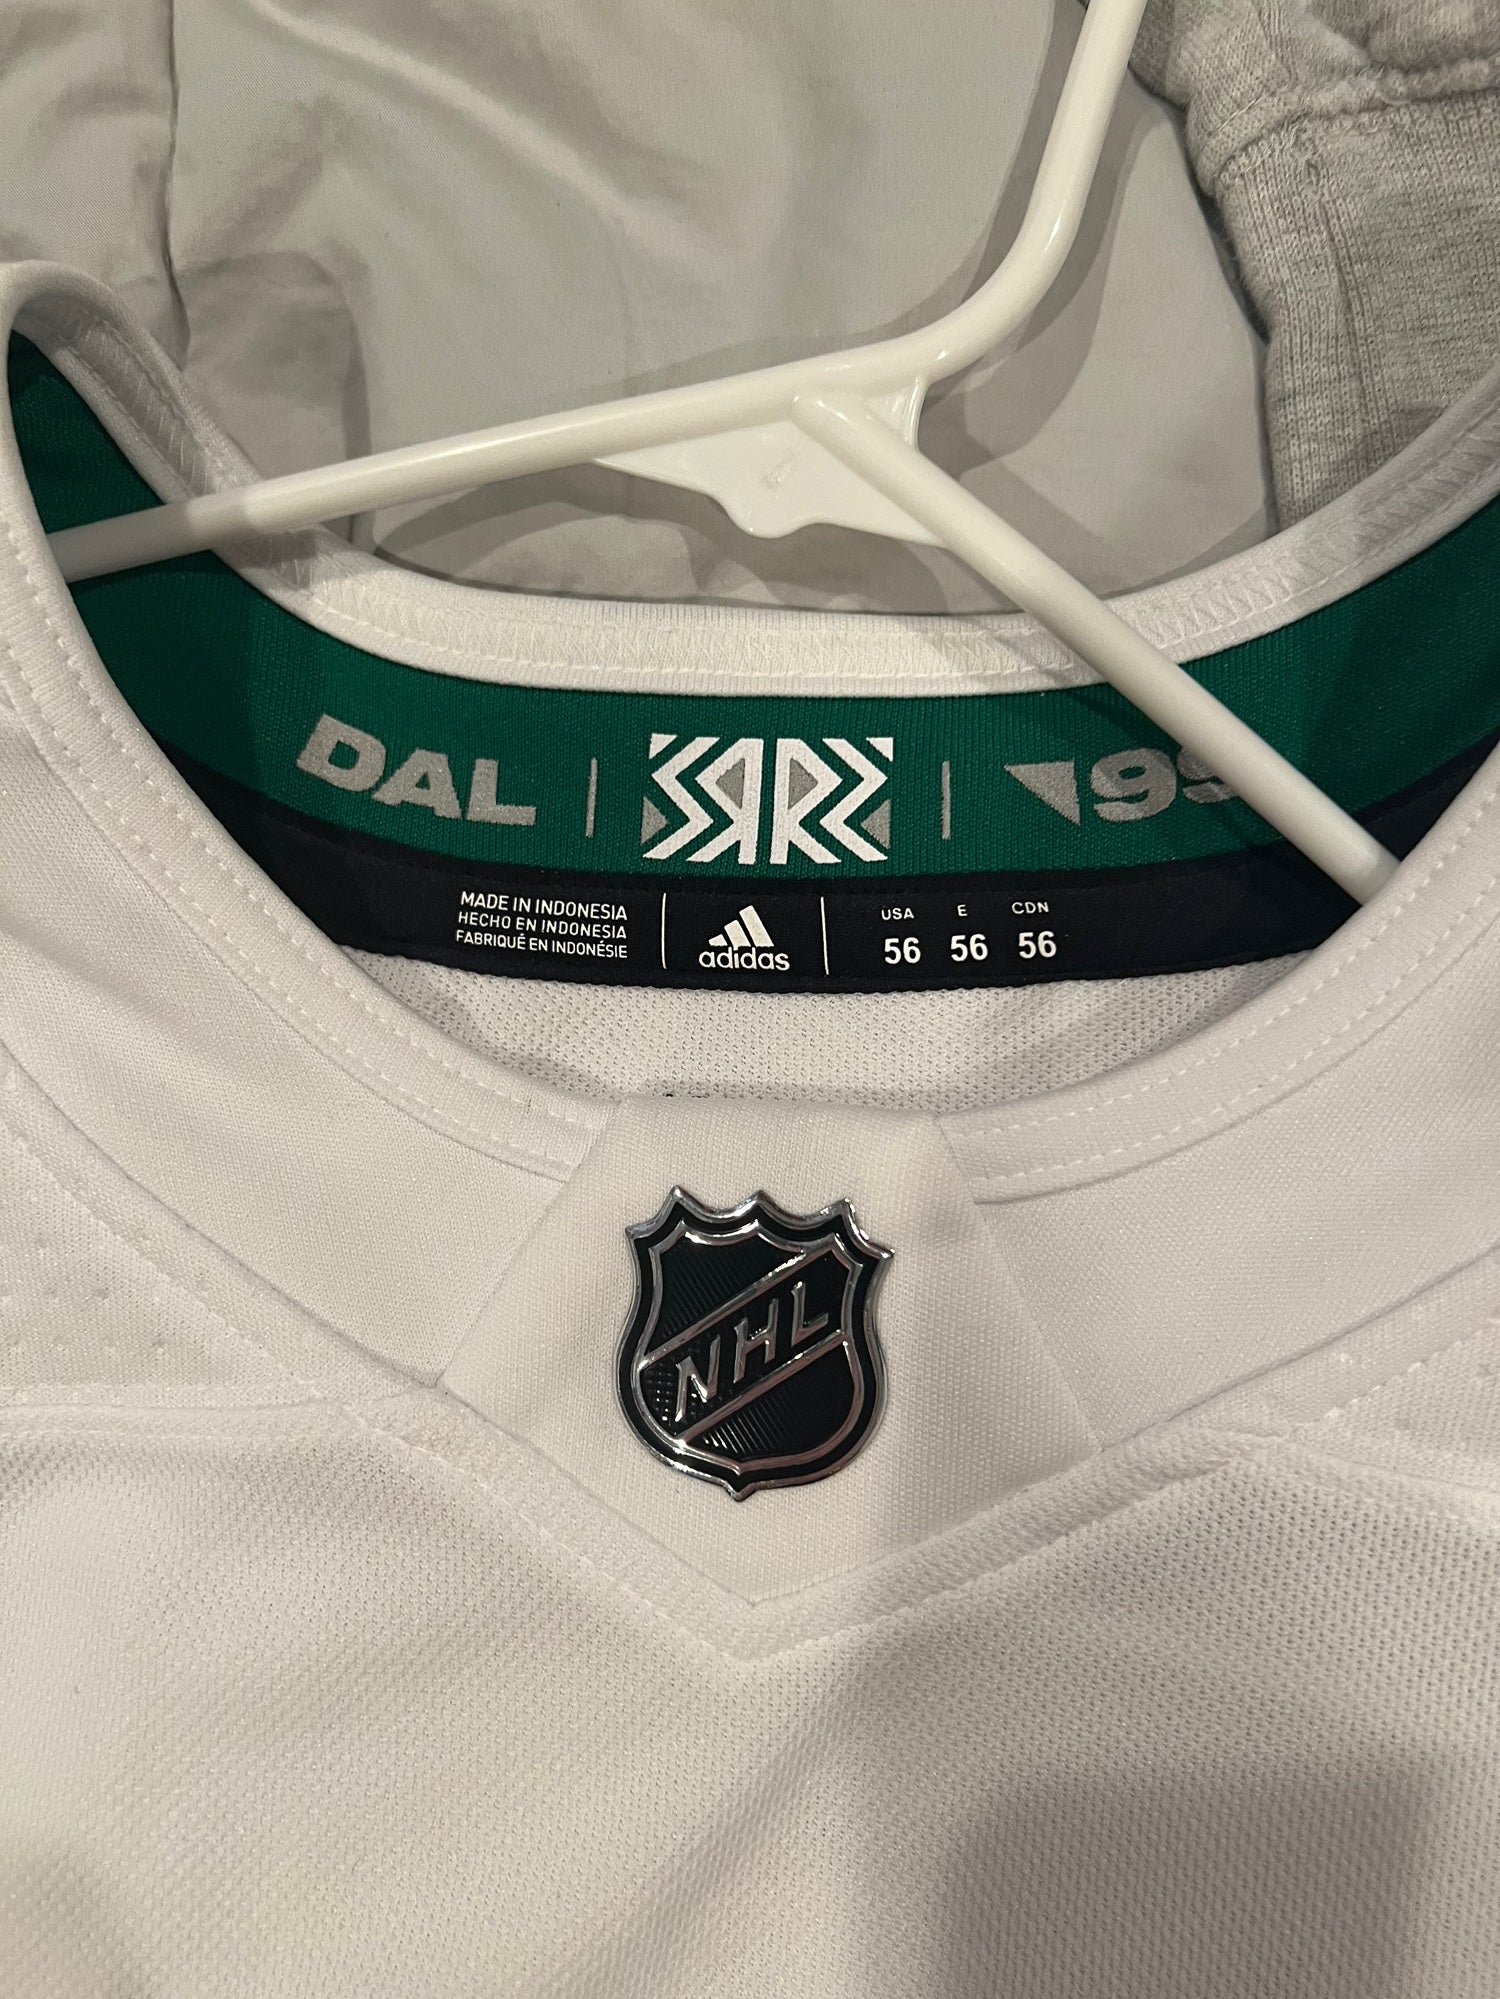 Adidas Dallas Stars Seguin Jersey Hockey - Youth - Home/Dark - Dallas Stars - L/XL